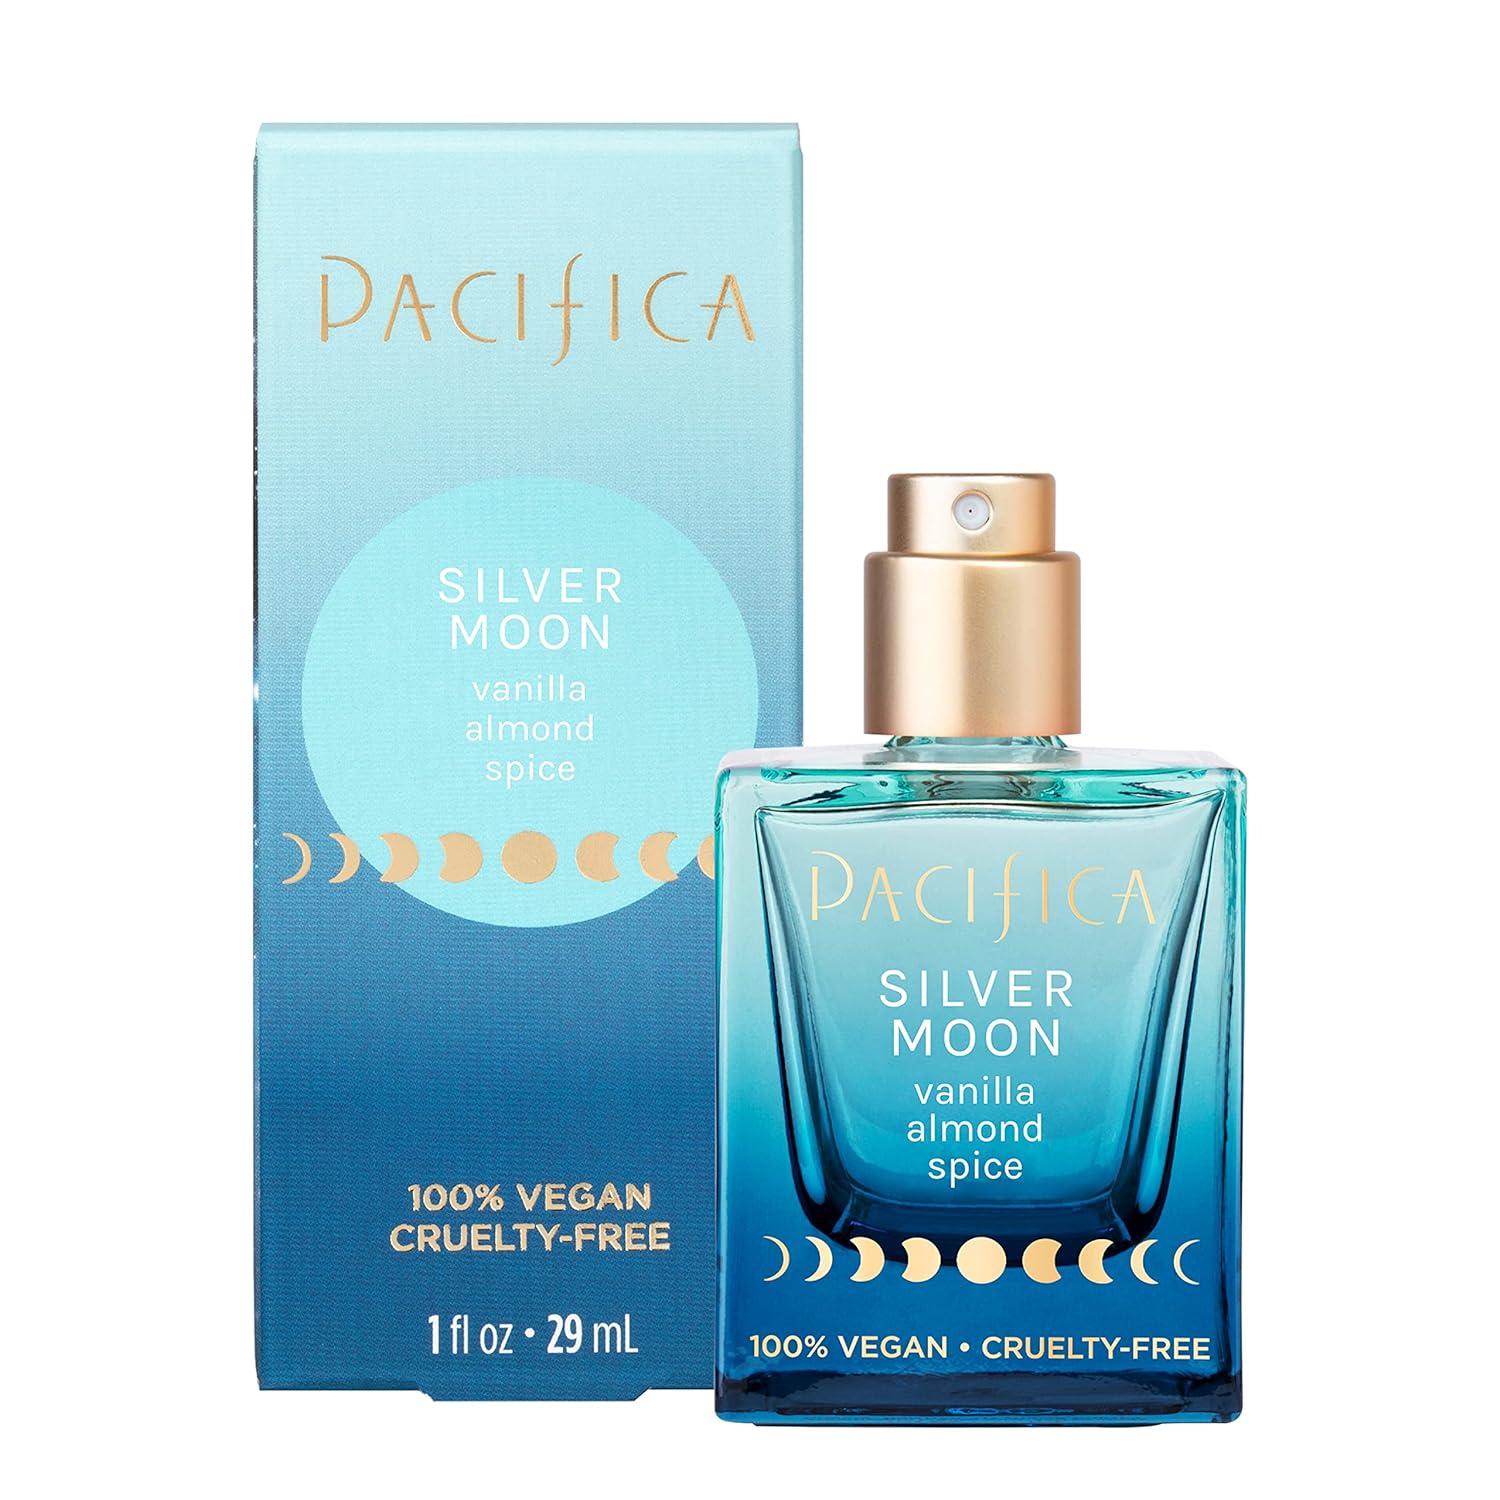 Pacifica Moon Perfume - Silver Perfume Spray Women 1fl oz (Packaging May Vary)